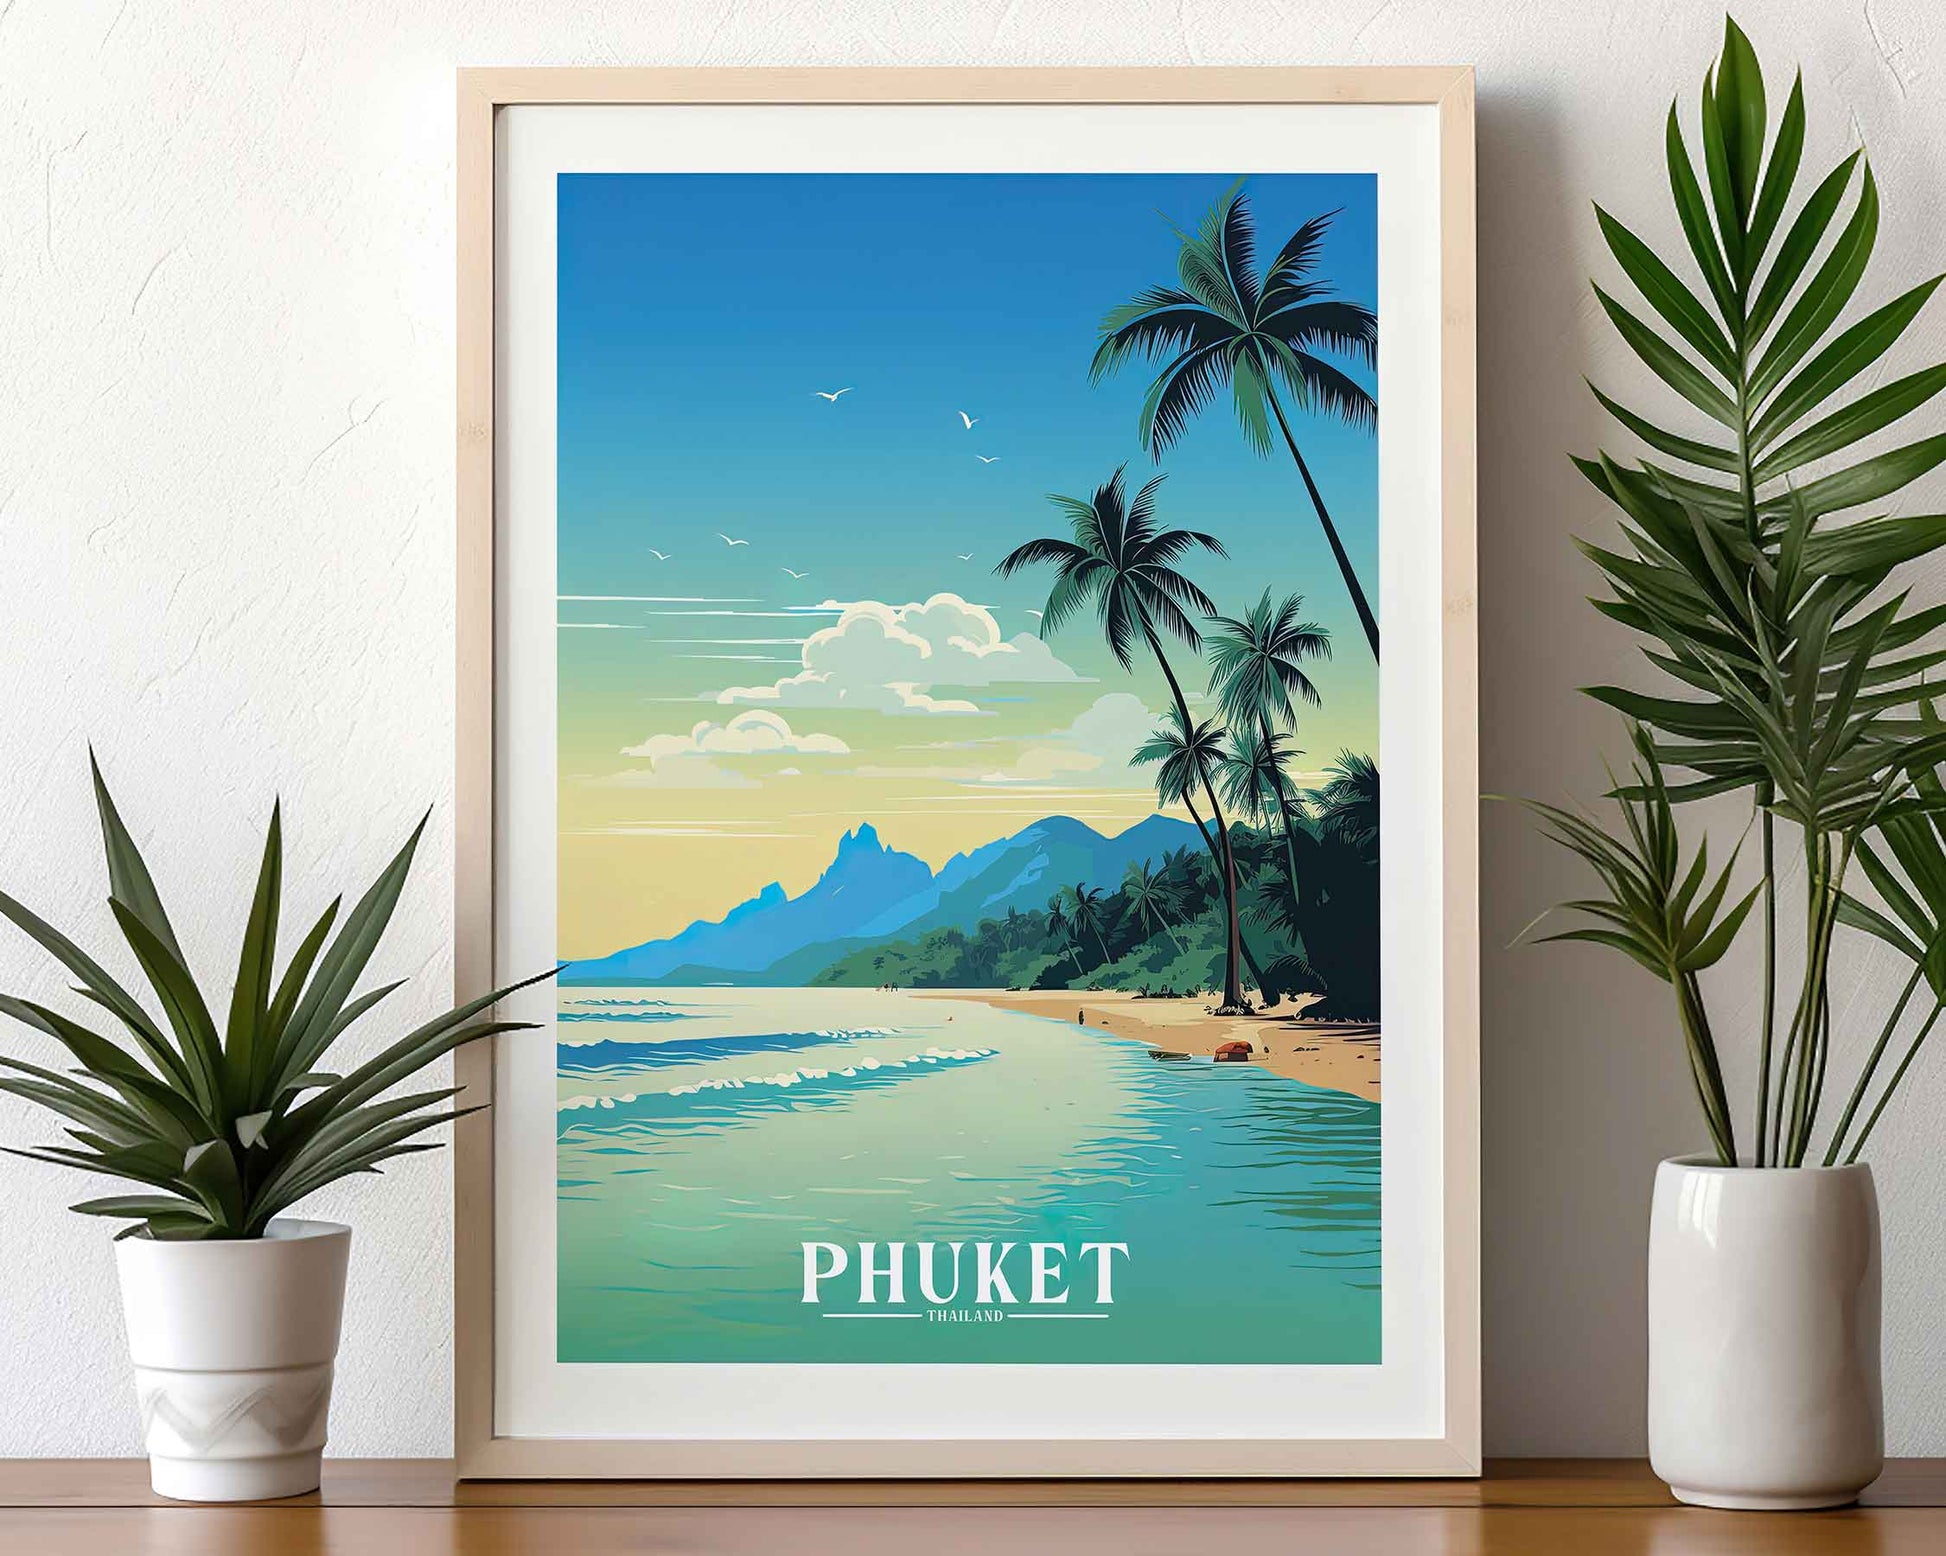 Framed Image of Phuket Thailand Illustration Travel Poster Prints Wall Art